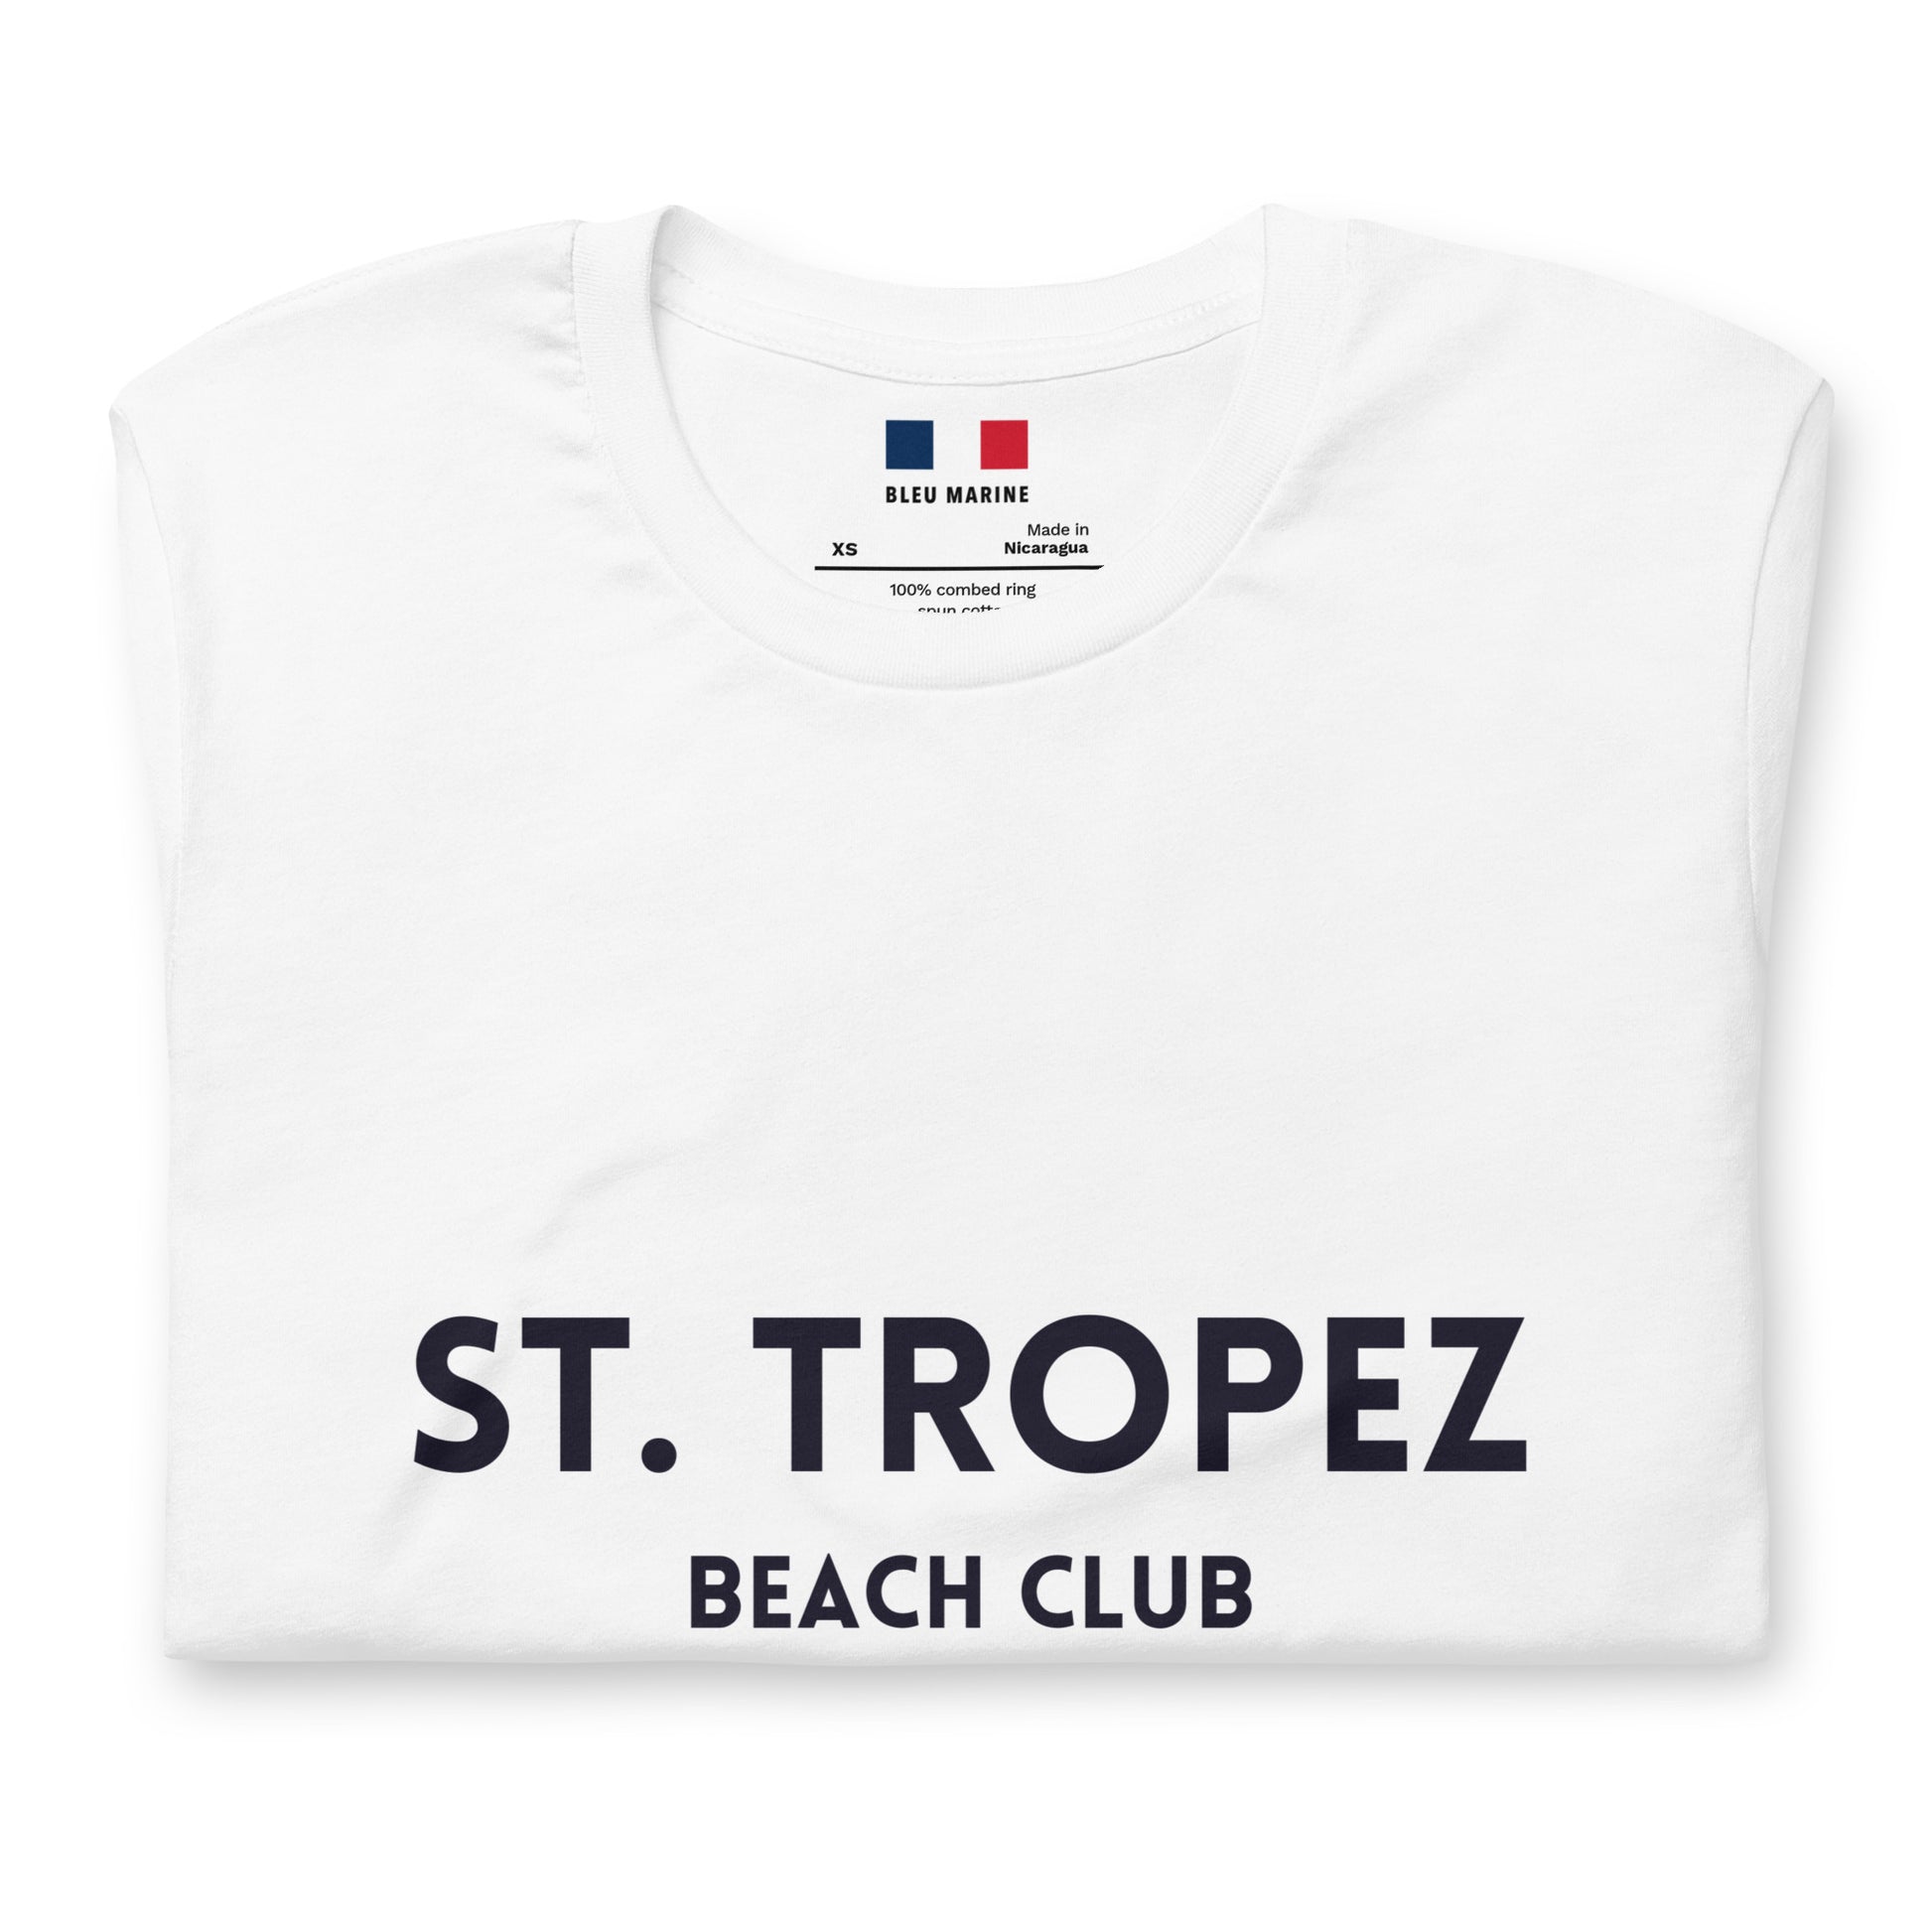 – St. Tropez Marine Bleu Clothing t-shirt